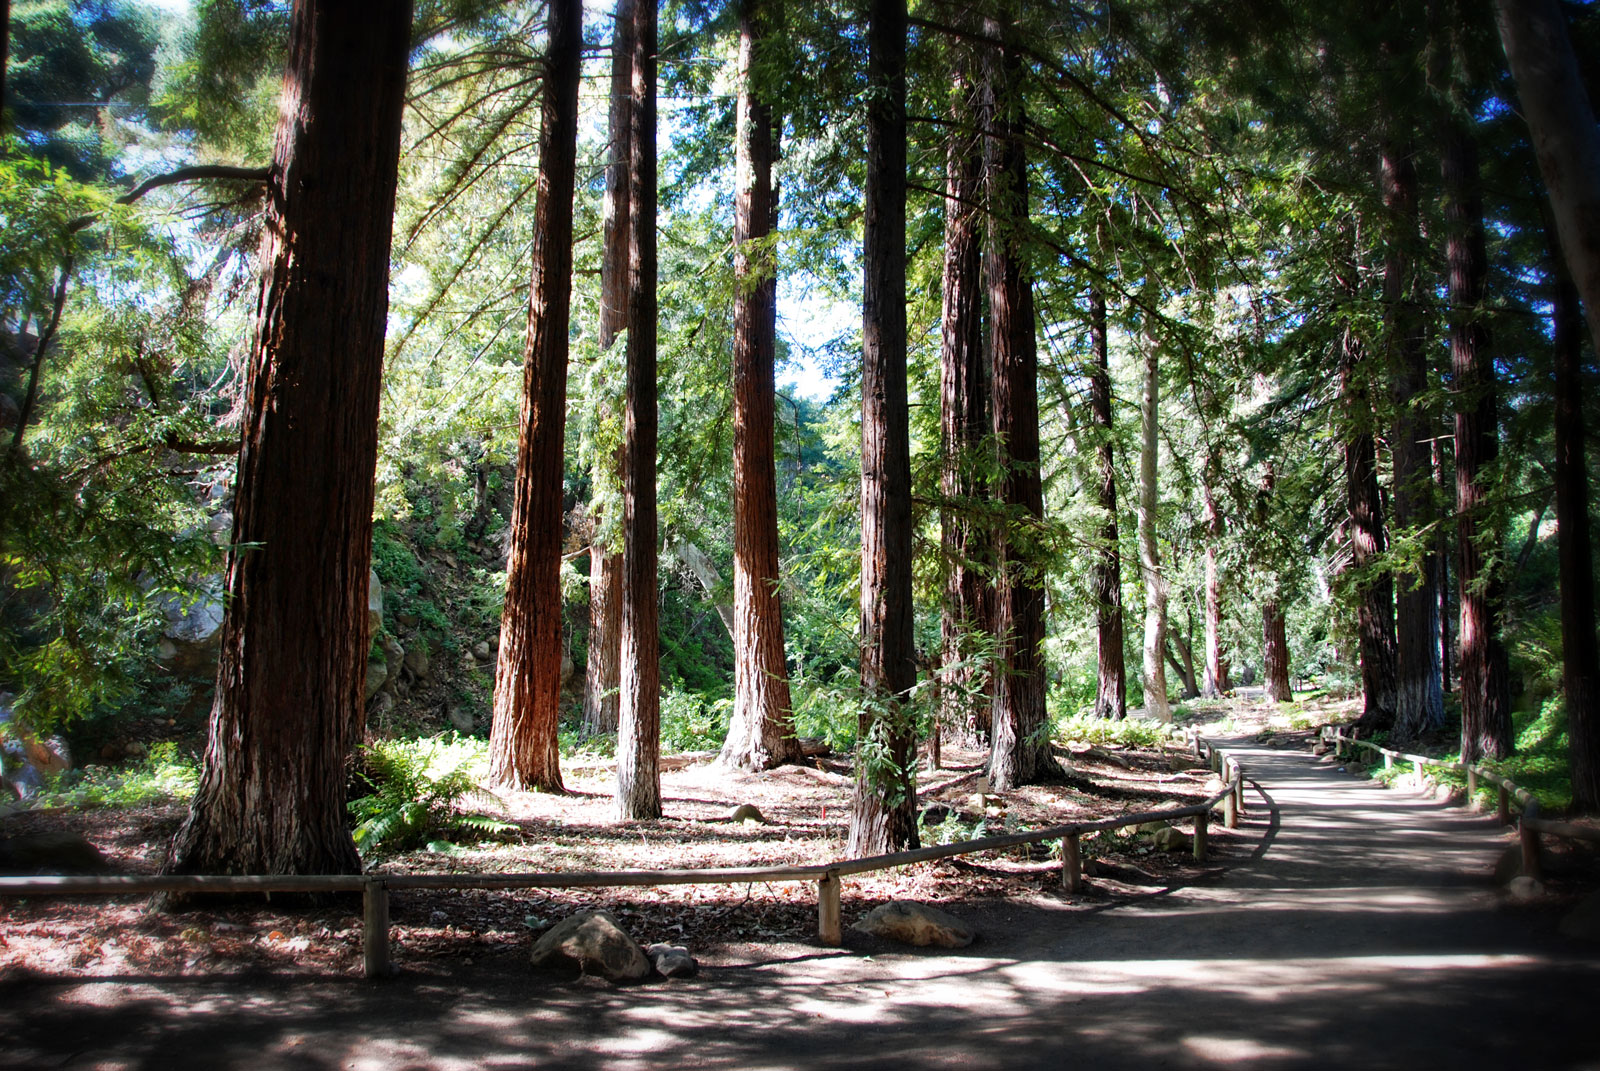 The Santa Barbara Botanic Garden Redwood Grove